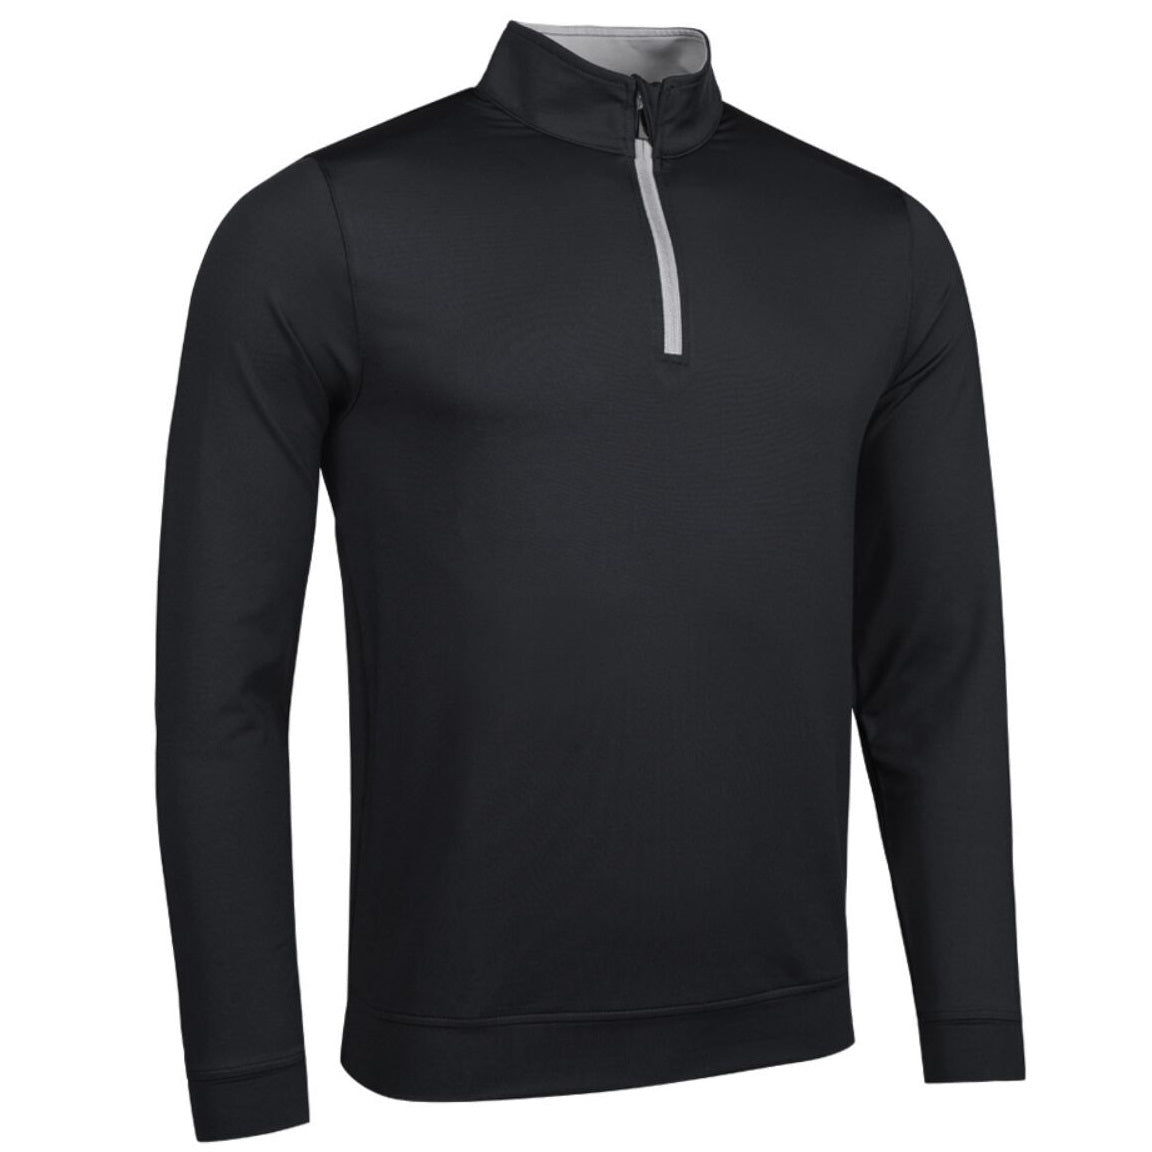 GLENMUIR Wick Quarter Zip Lightweight Golf Midlayer - Mens - Black / Light Grey